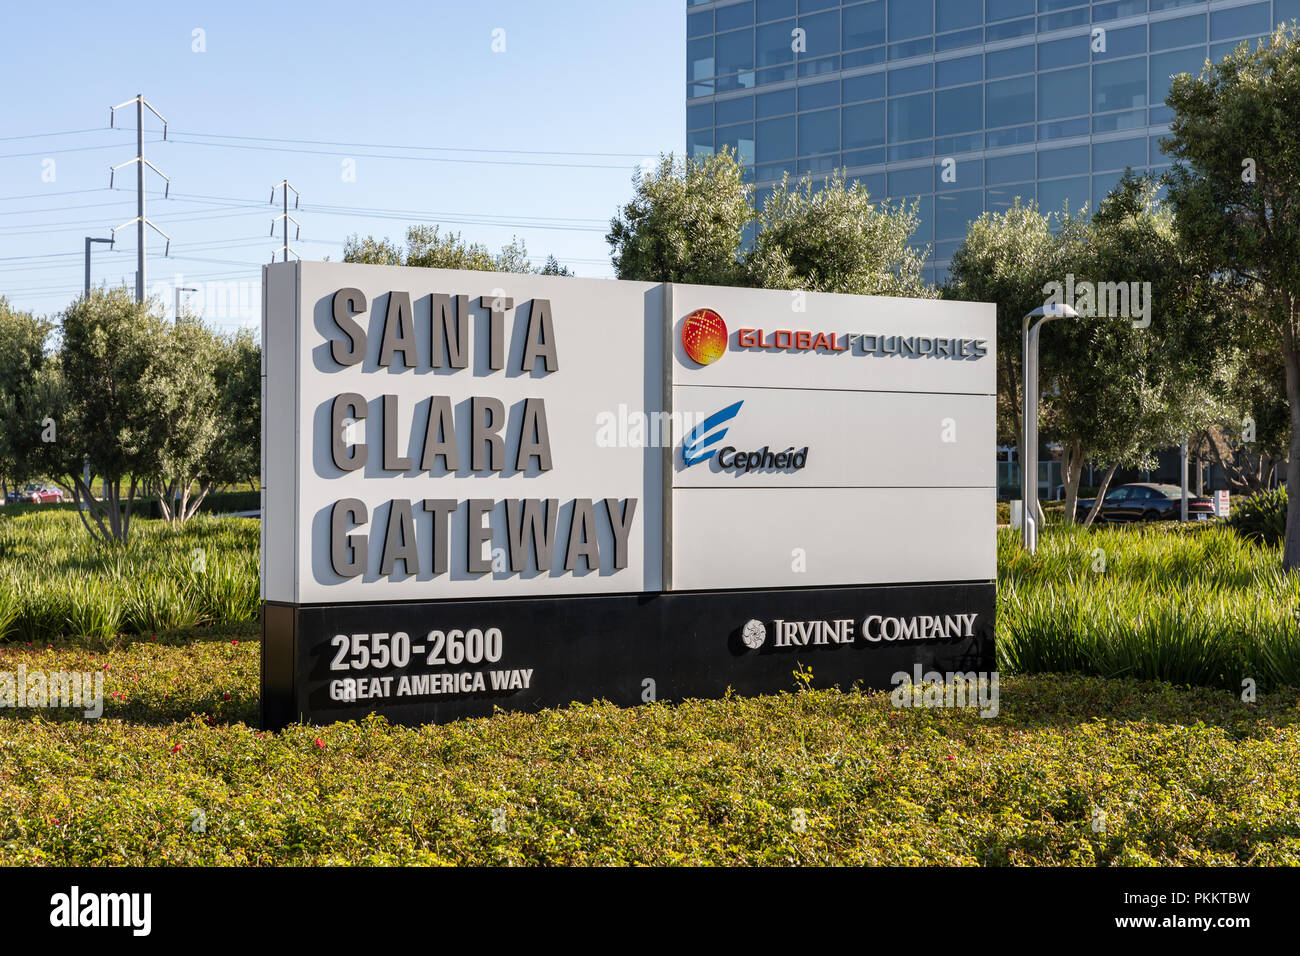 Santa Clara Gateway, 2550-2600 Great America Way, sign between buildings; Santa Clara, San José, California, USA Stock Photo